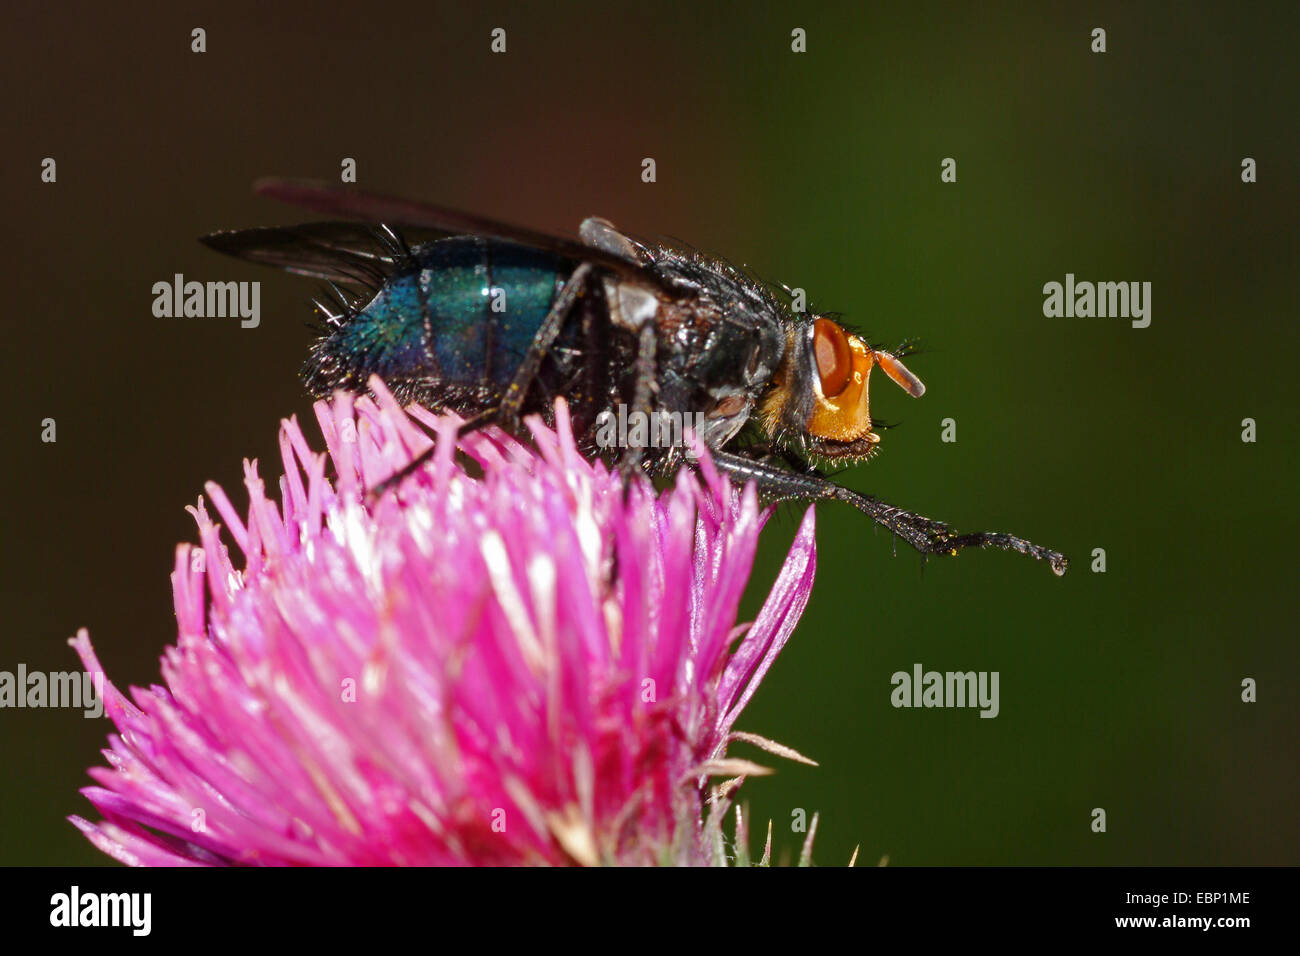 Fly of the dead, Bluebottle Blow Fly (Cynomyia mortuorum, Cynomya hirta), on lilac flower, Germany Stock Photo